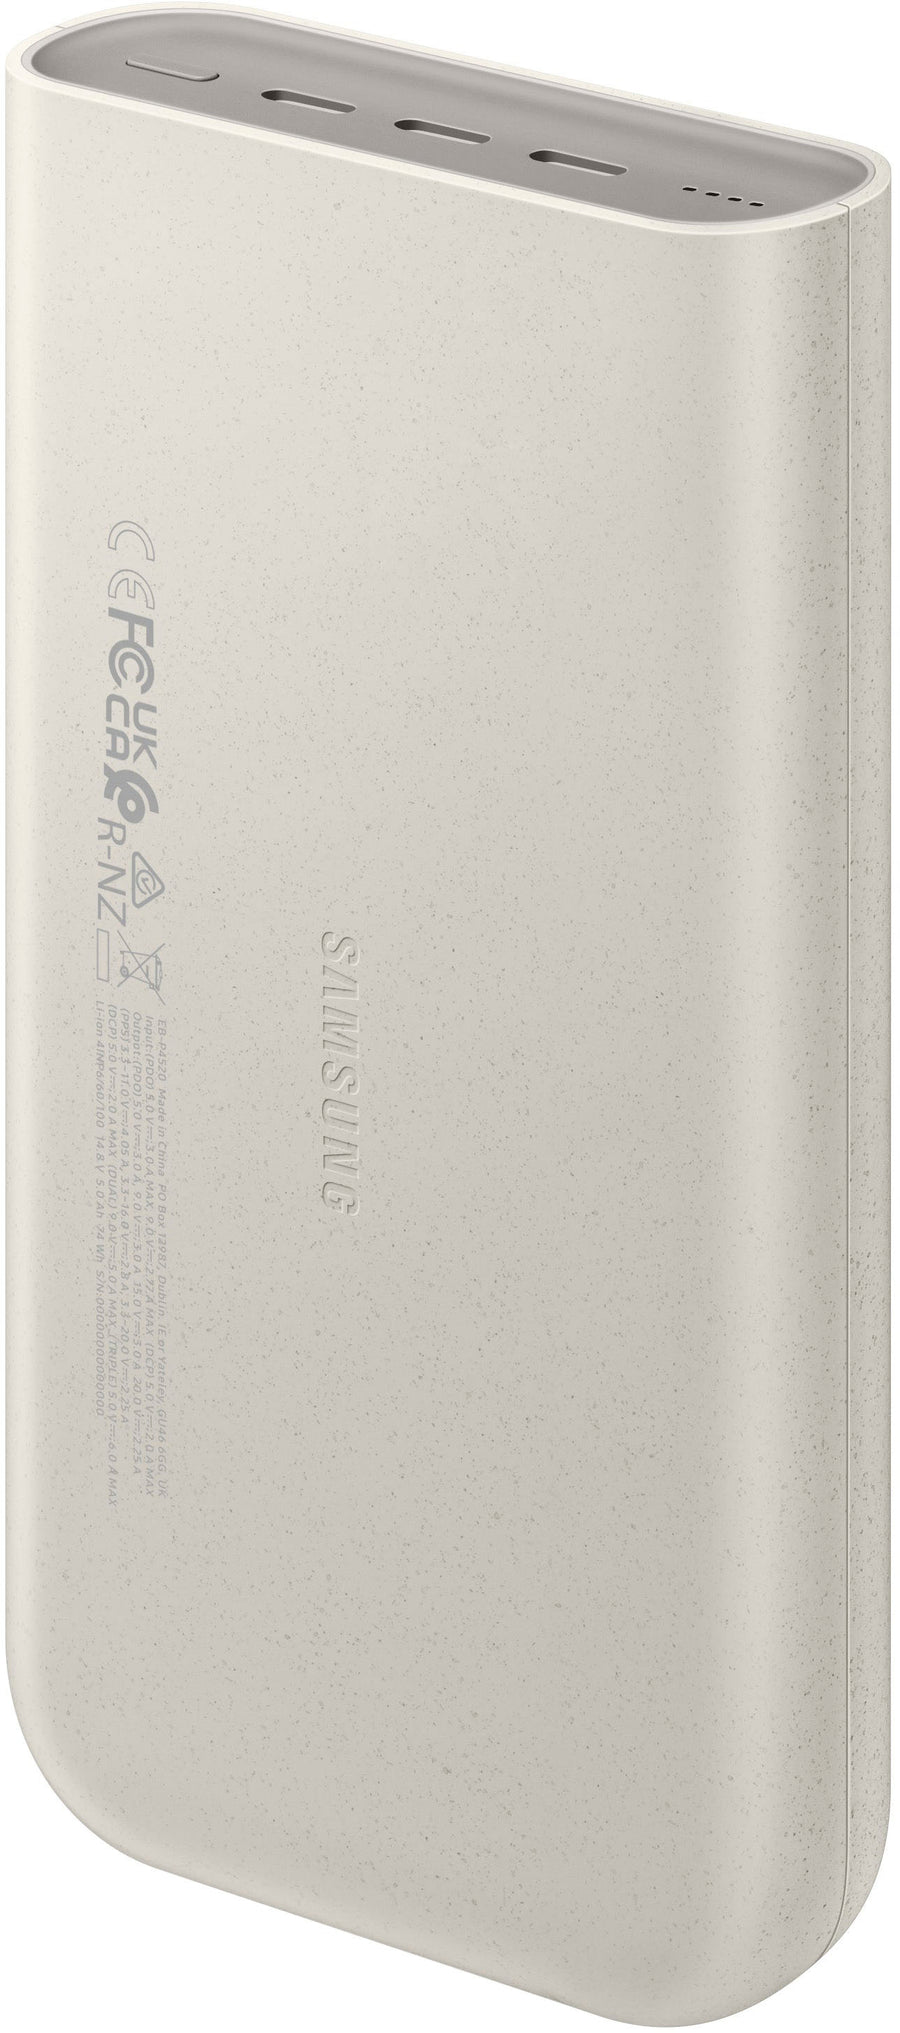 Samsung - 45W 20,000mAh Battery Pack - Beige_0